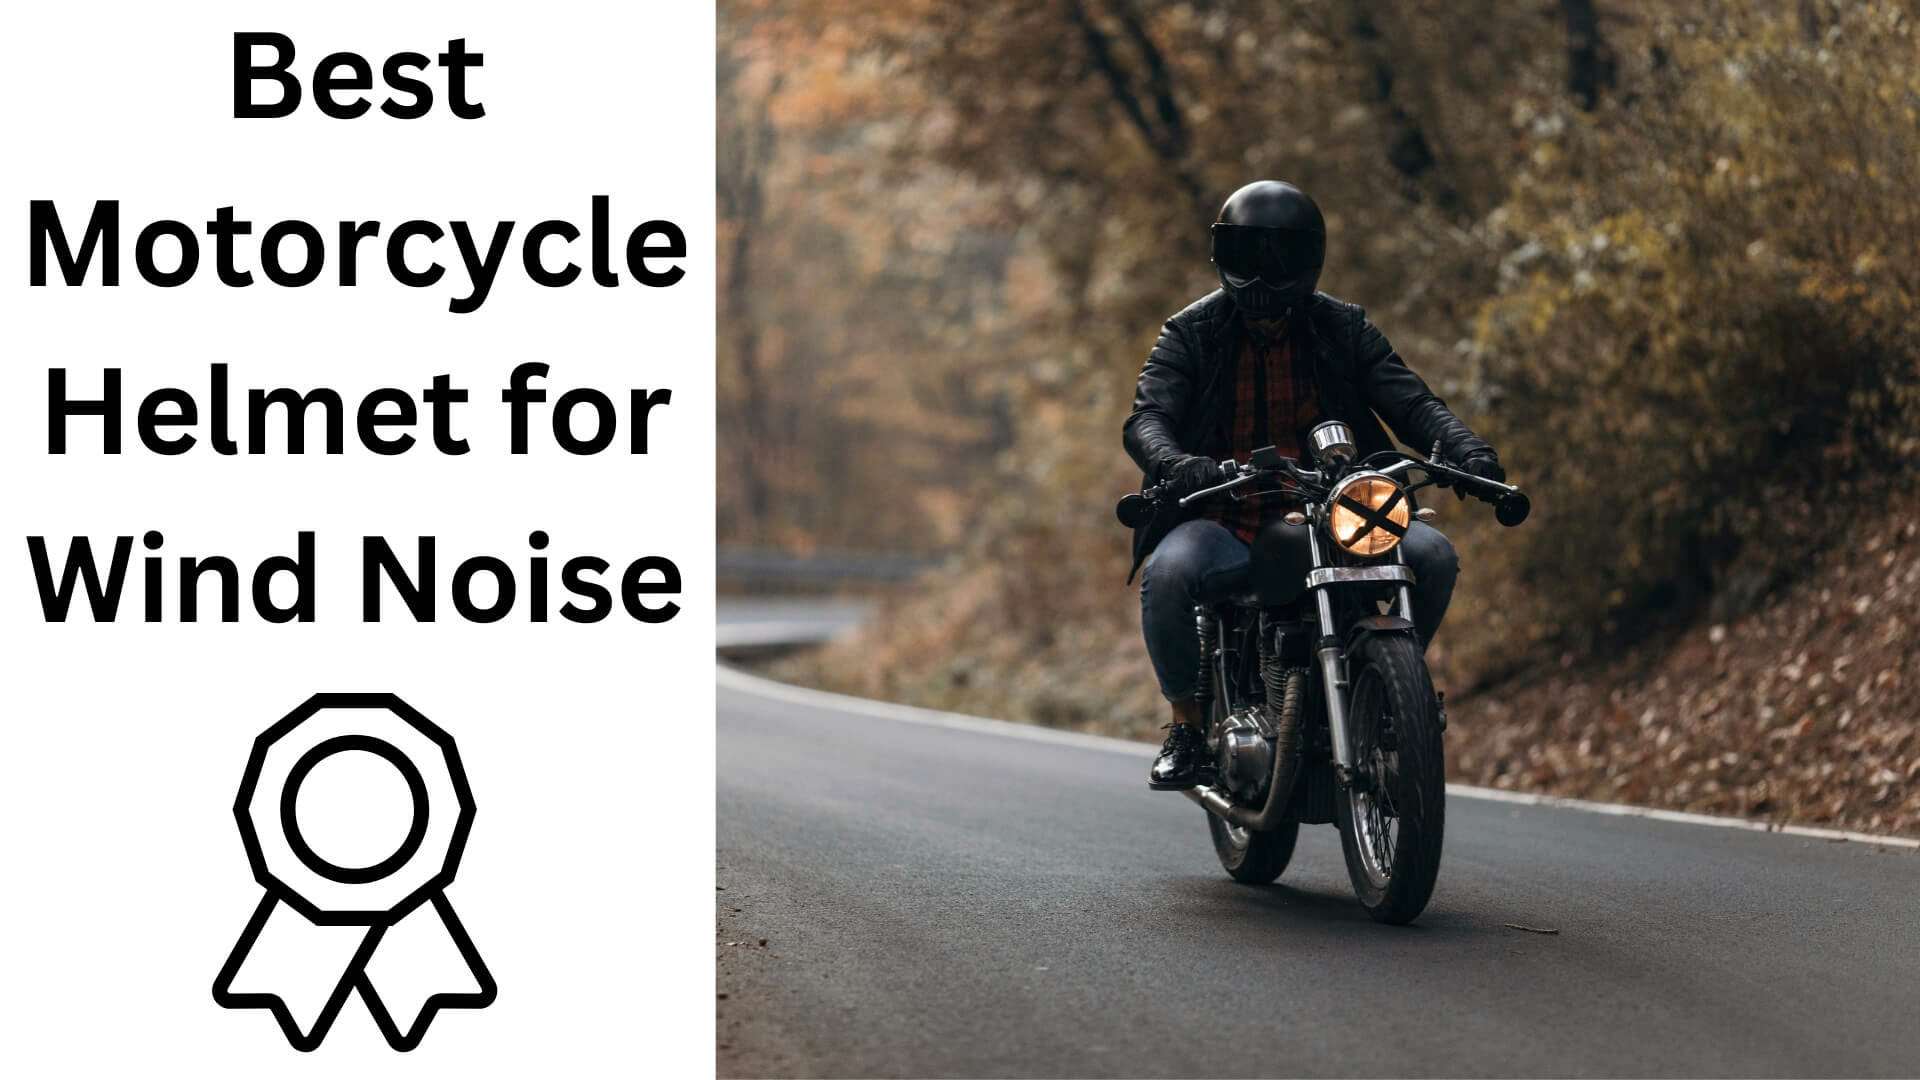 The Top 8 Best Motorcycle Helmet For Wind Noise